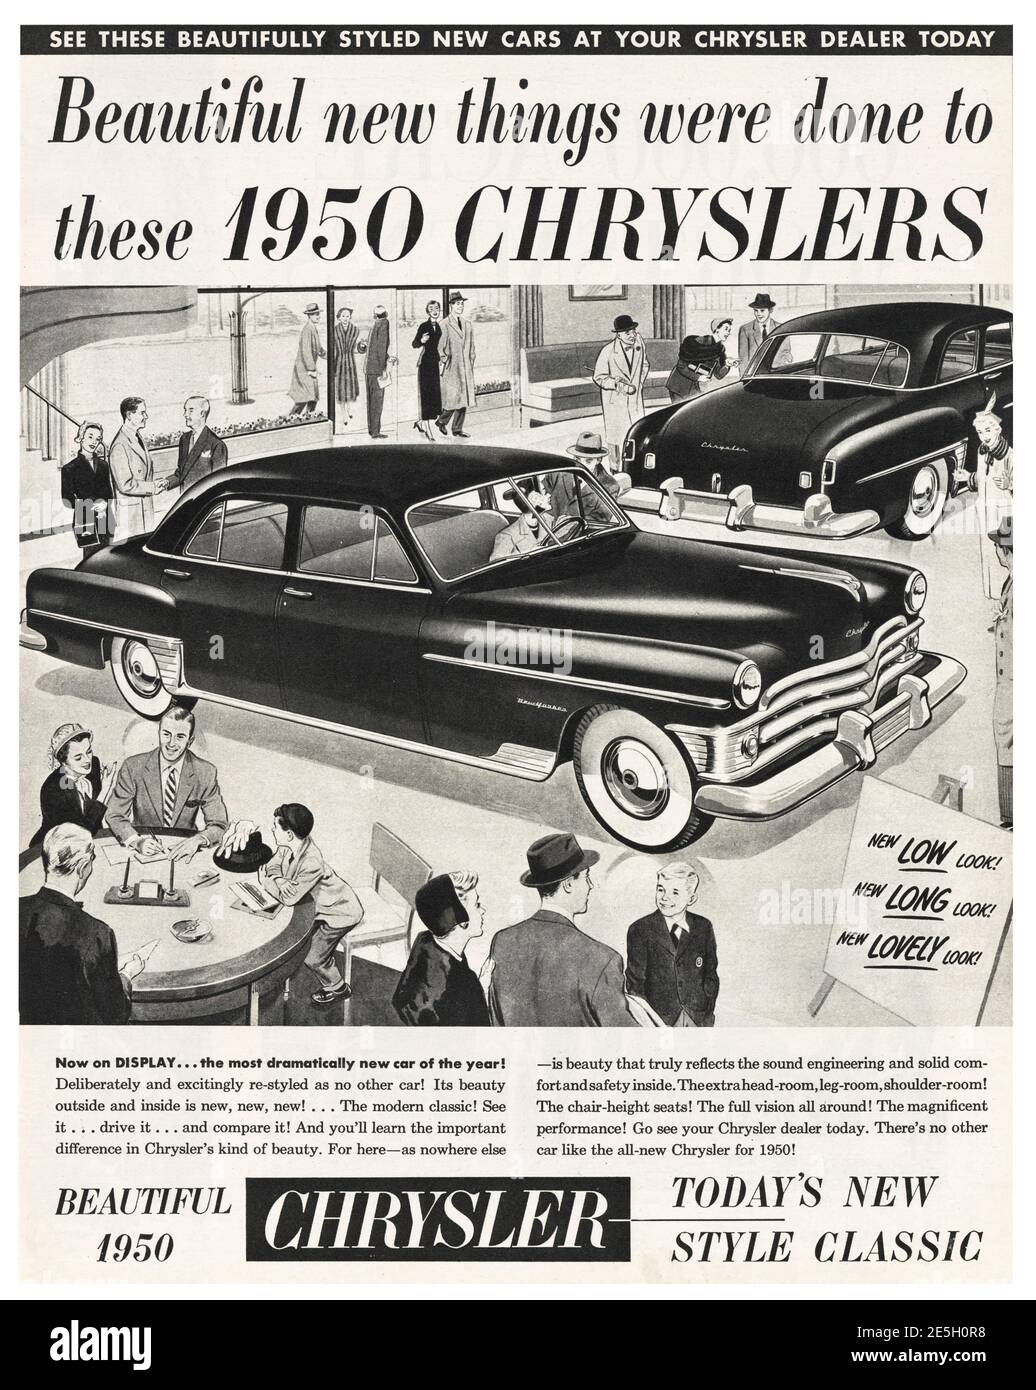 1950 U.S. Magazine Chrysler Car Advert Stock Photo